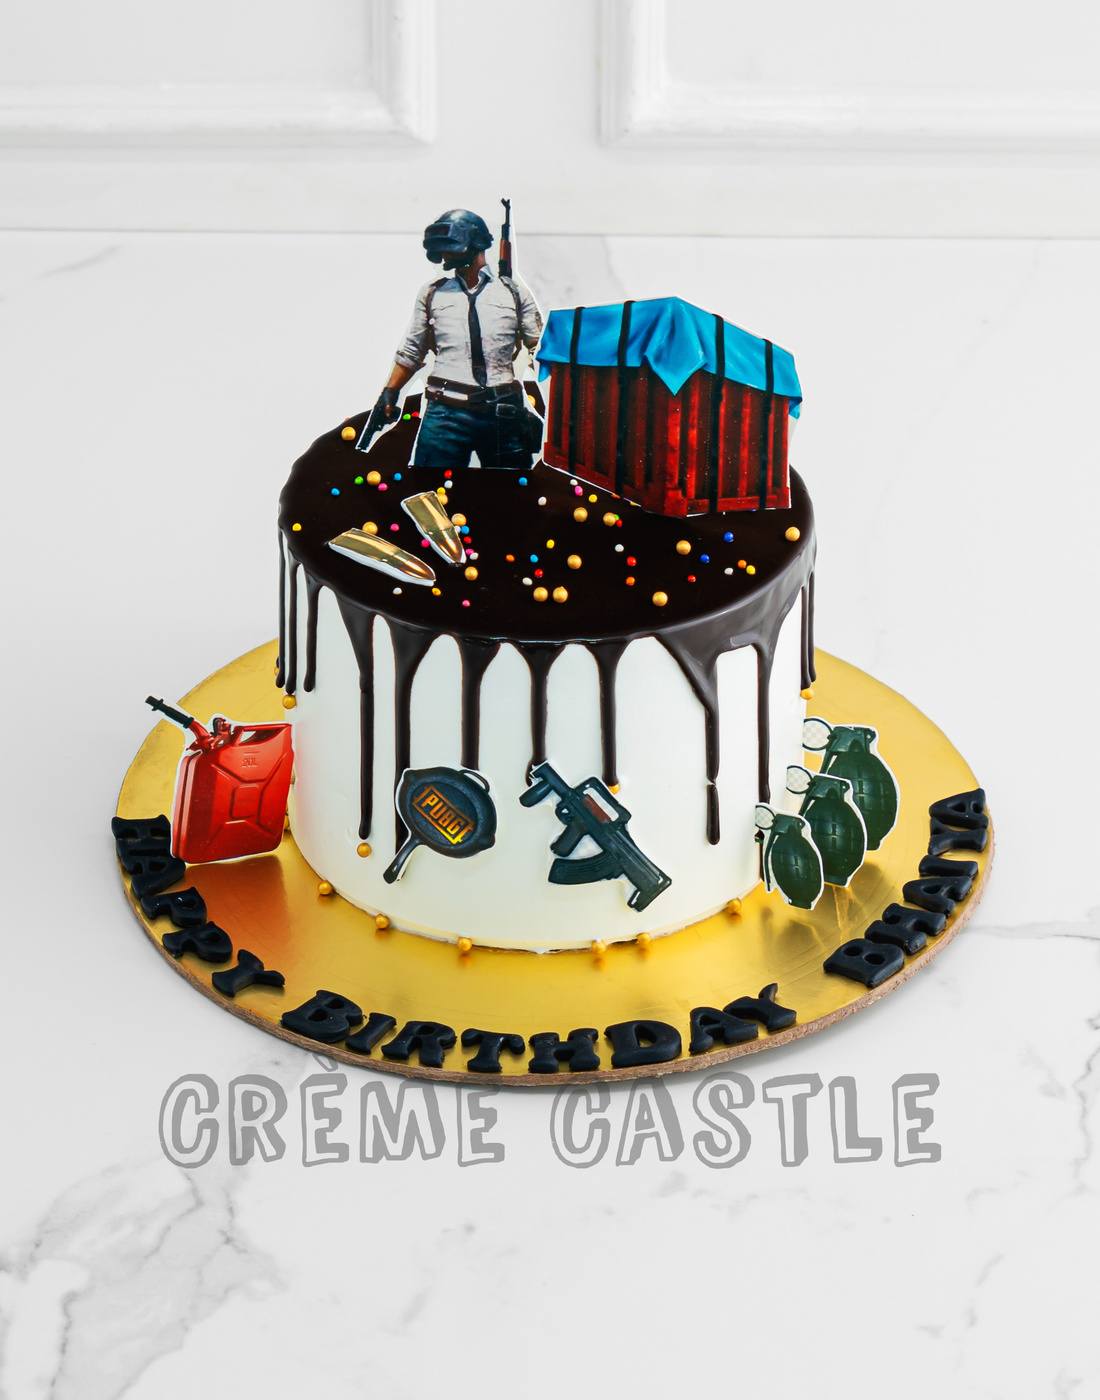 Send Pubg Cake for Birthday Online - GAL20-94600 | Giftalove